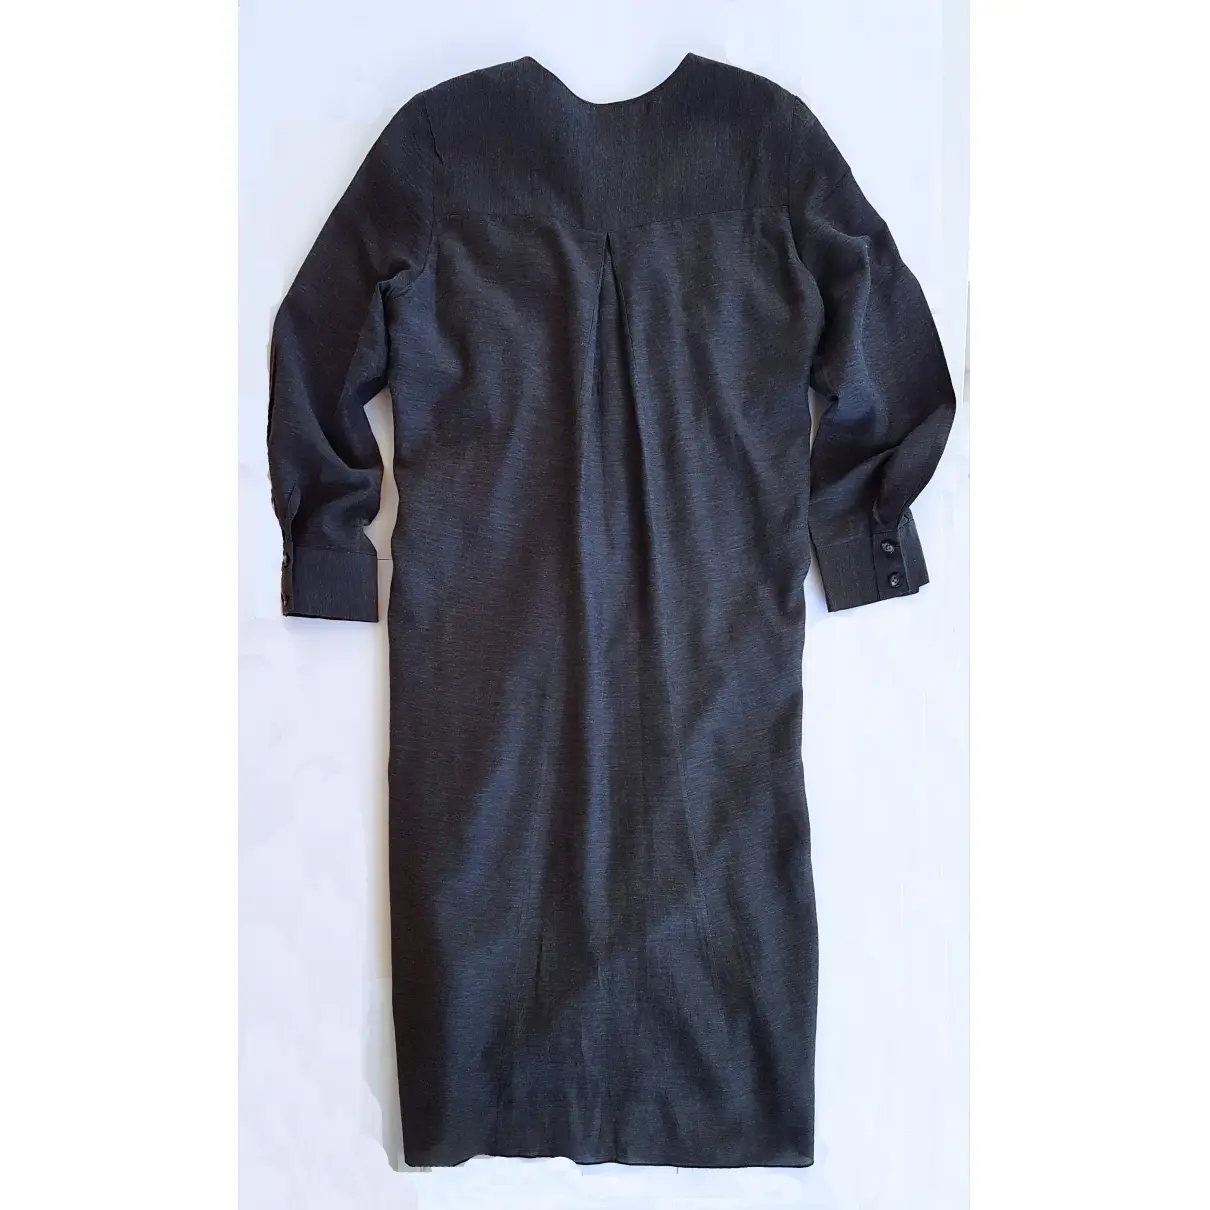 Thakoon Mid-length dress for sale